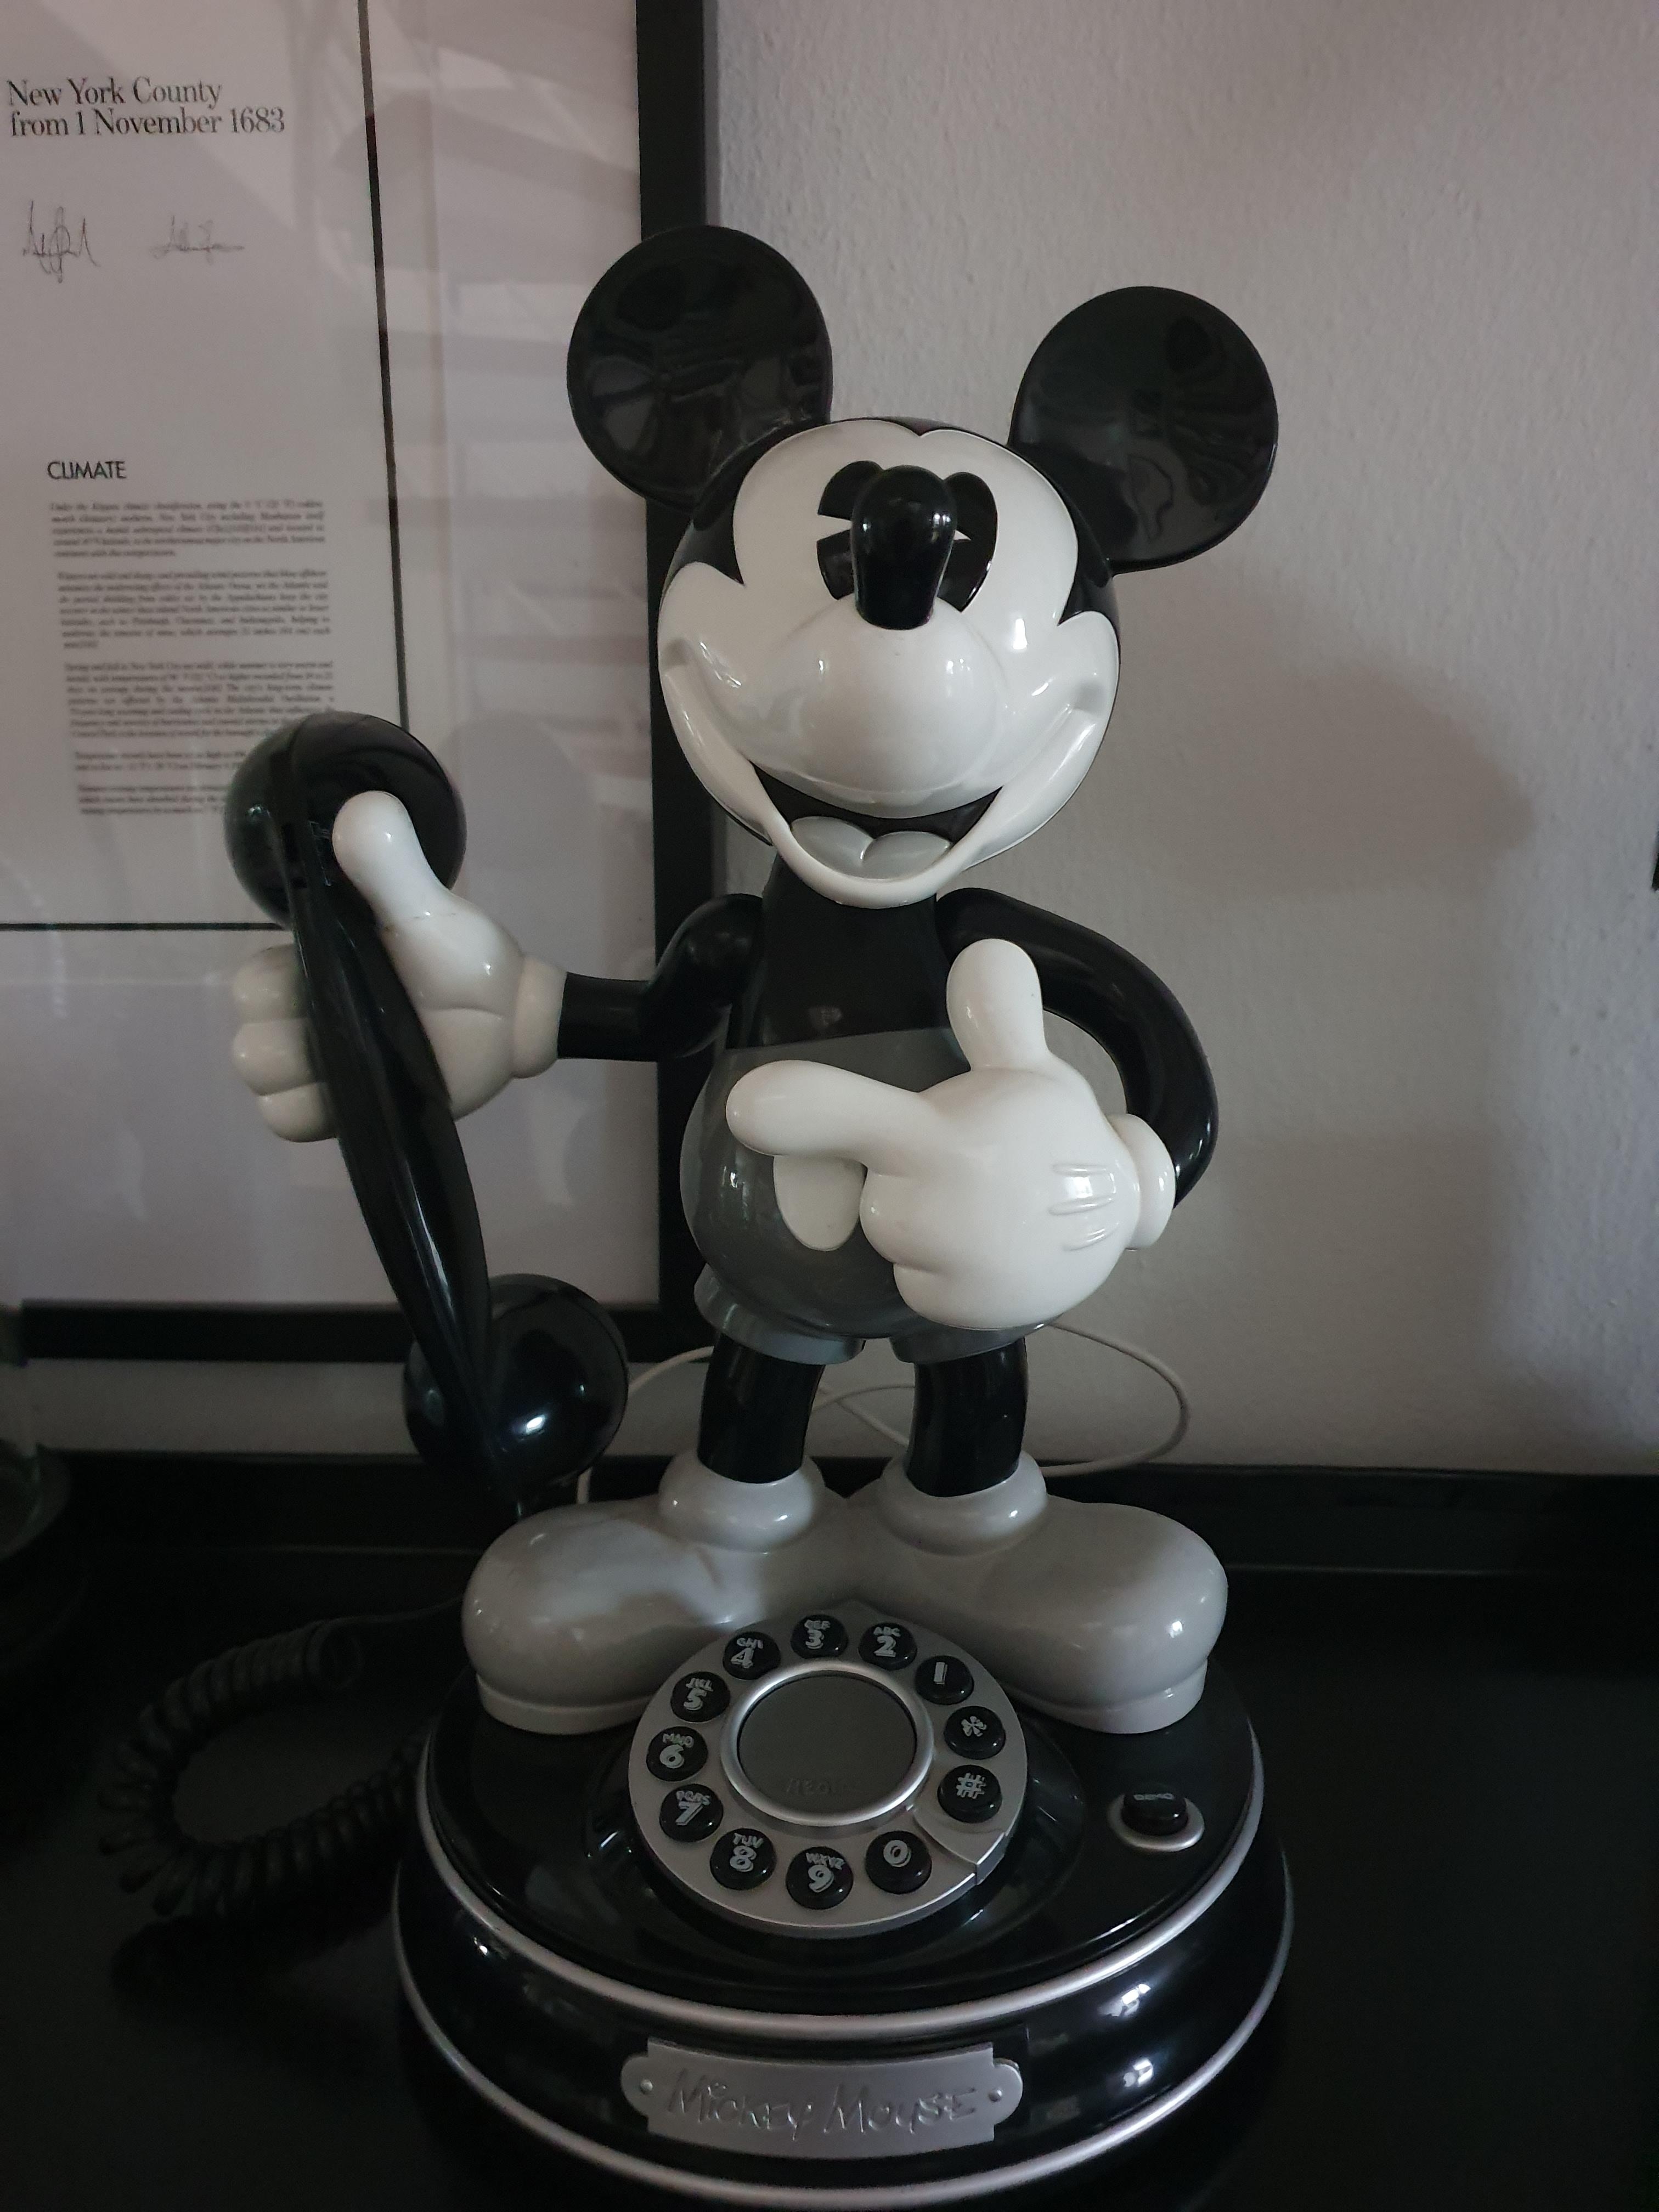 Mickey Mouse
Vintage Telefon 